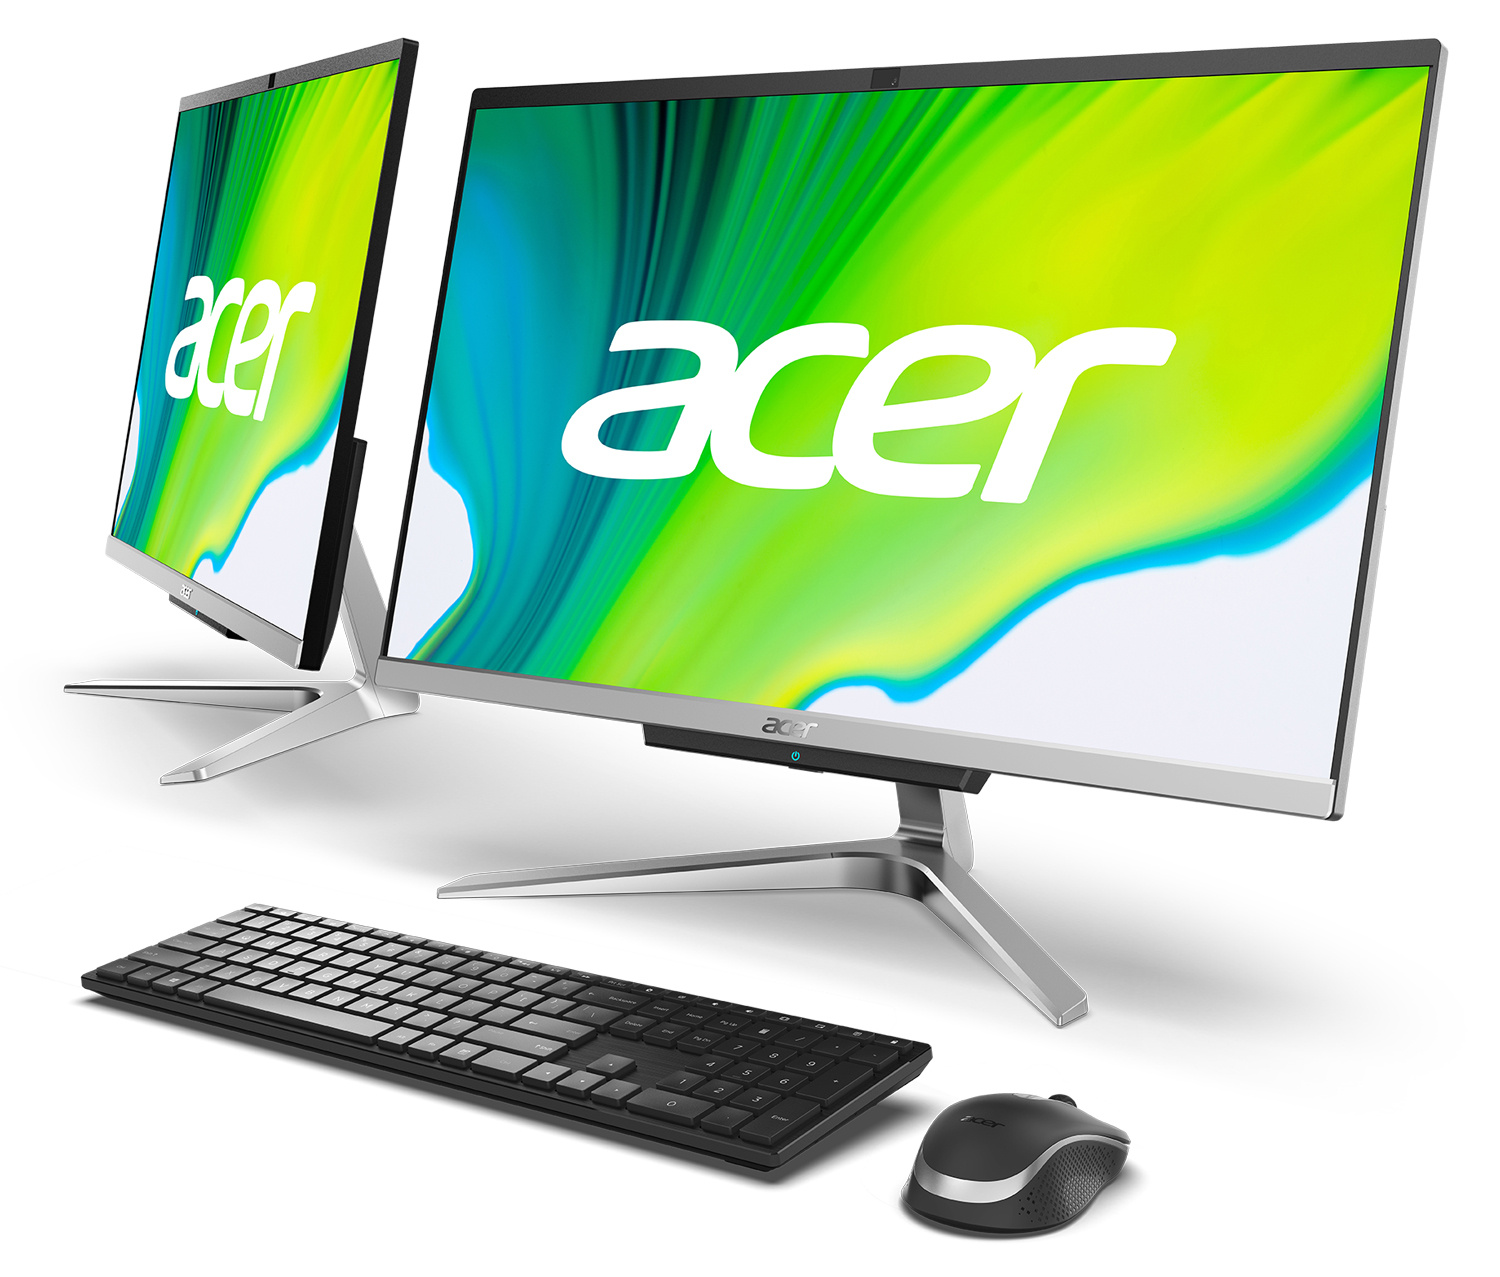 Acer Aspire c24-963. Моноблок Acer Aspire c22-963. Acer Aspire 24 моноблок. Моноблок 23.8 Acer Aspire c24-963 (FHD)Core i5 1035g1/8gb/256gb SSD/endless os/KB+M.